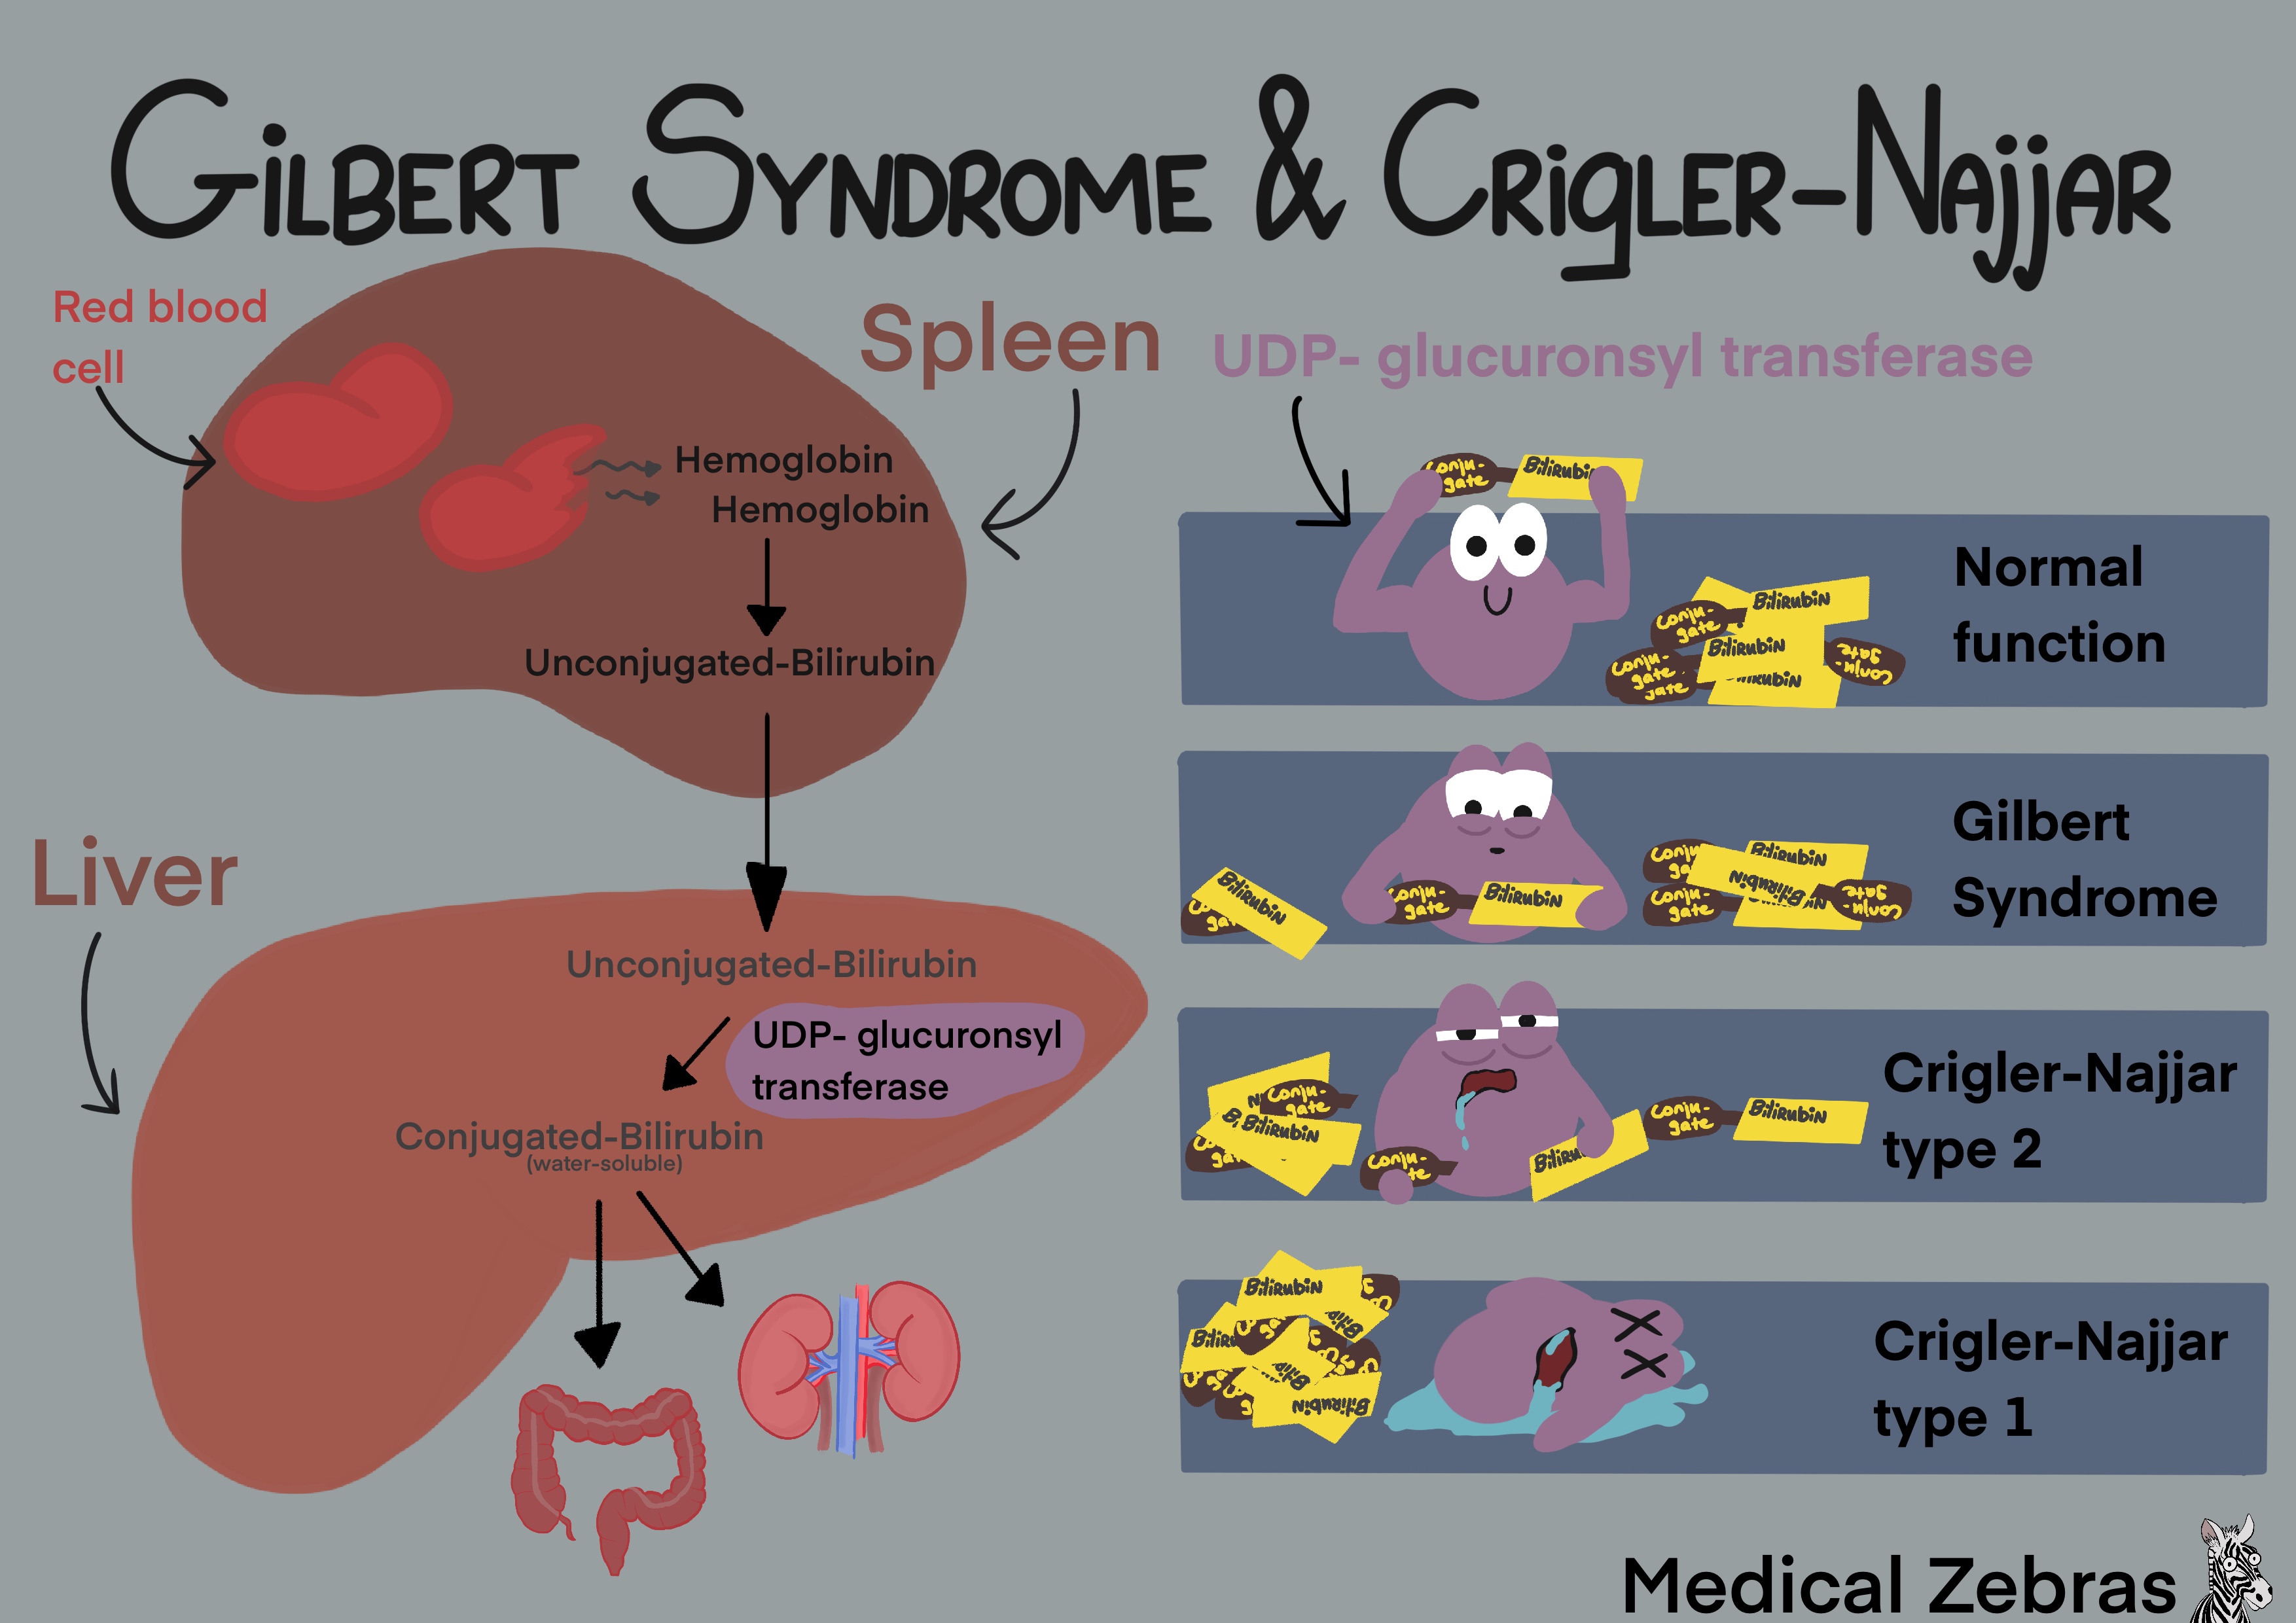 Gilbert syndrome and Crigler-Najjar syndrome explained easily